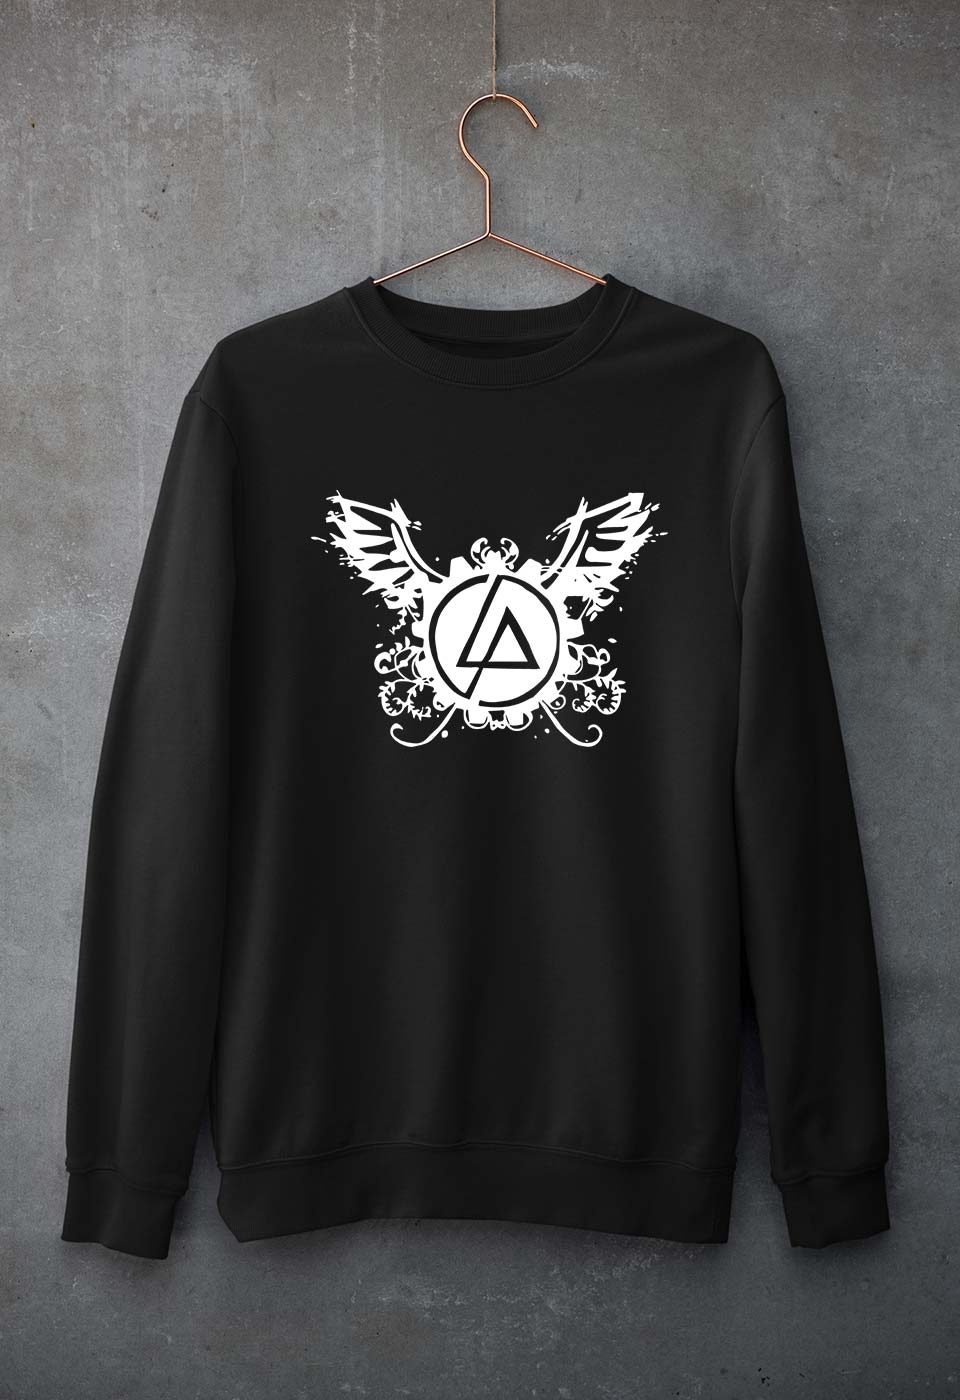 Linkin Park Unisex Sweatshirt for Men/Women-S(40 Inches)-Black-Ektarfa.online